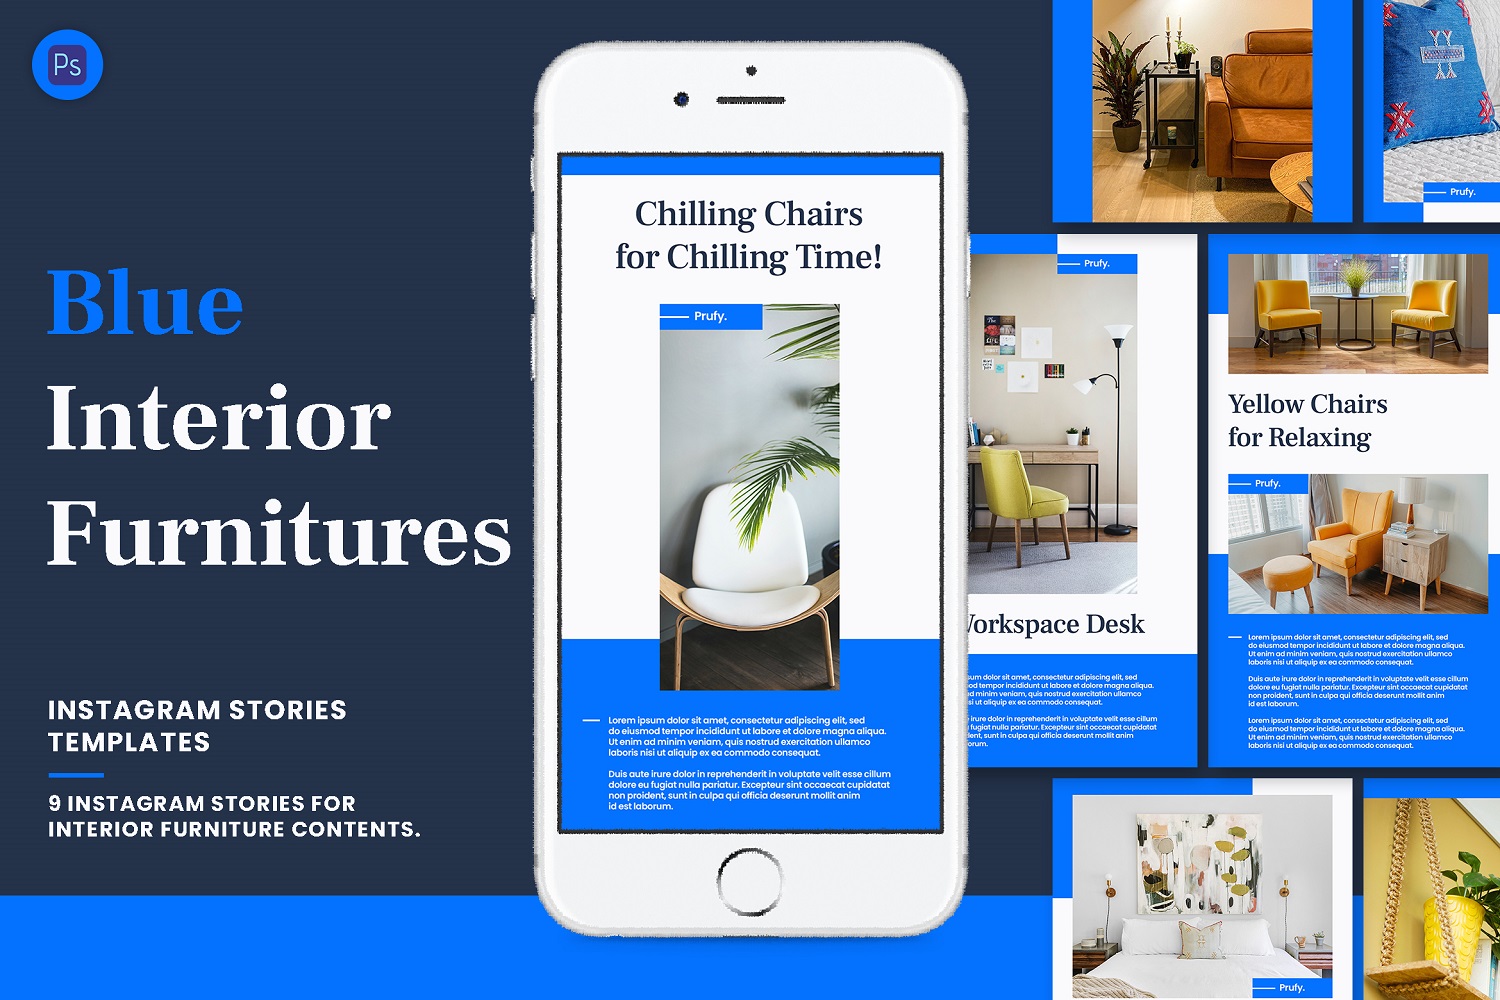 Blue Interior Furniture Instagram Stories Template